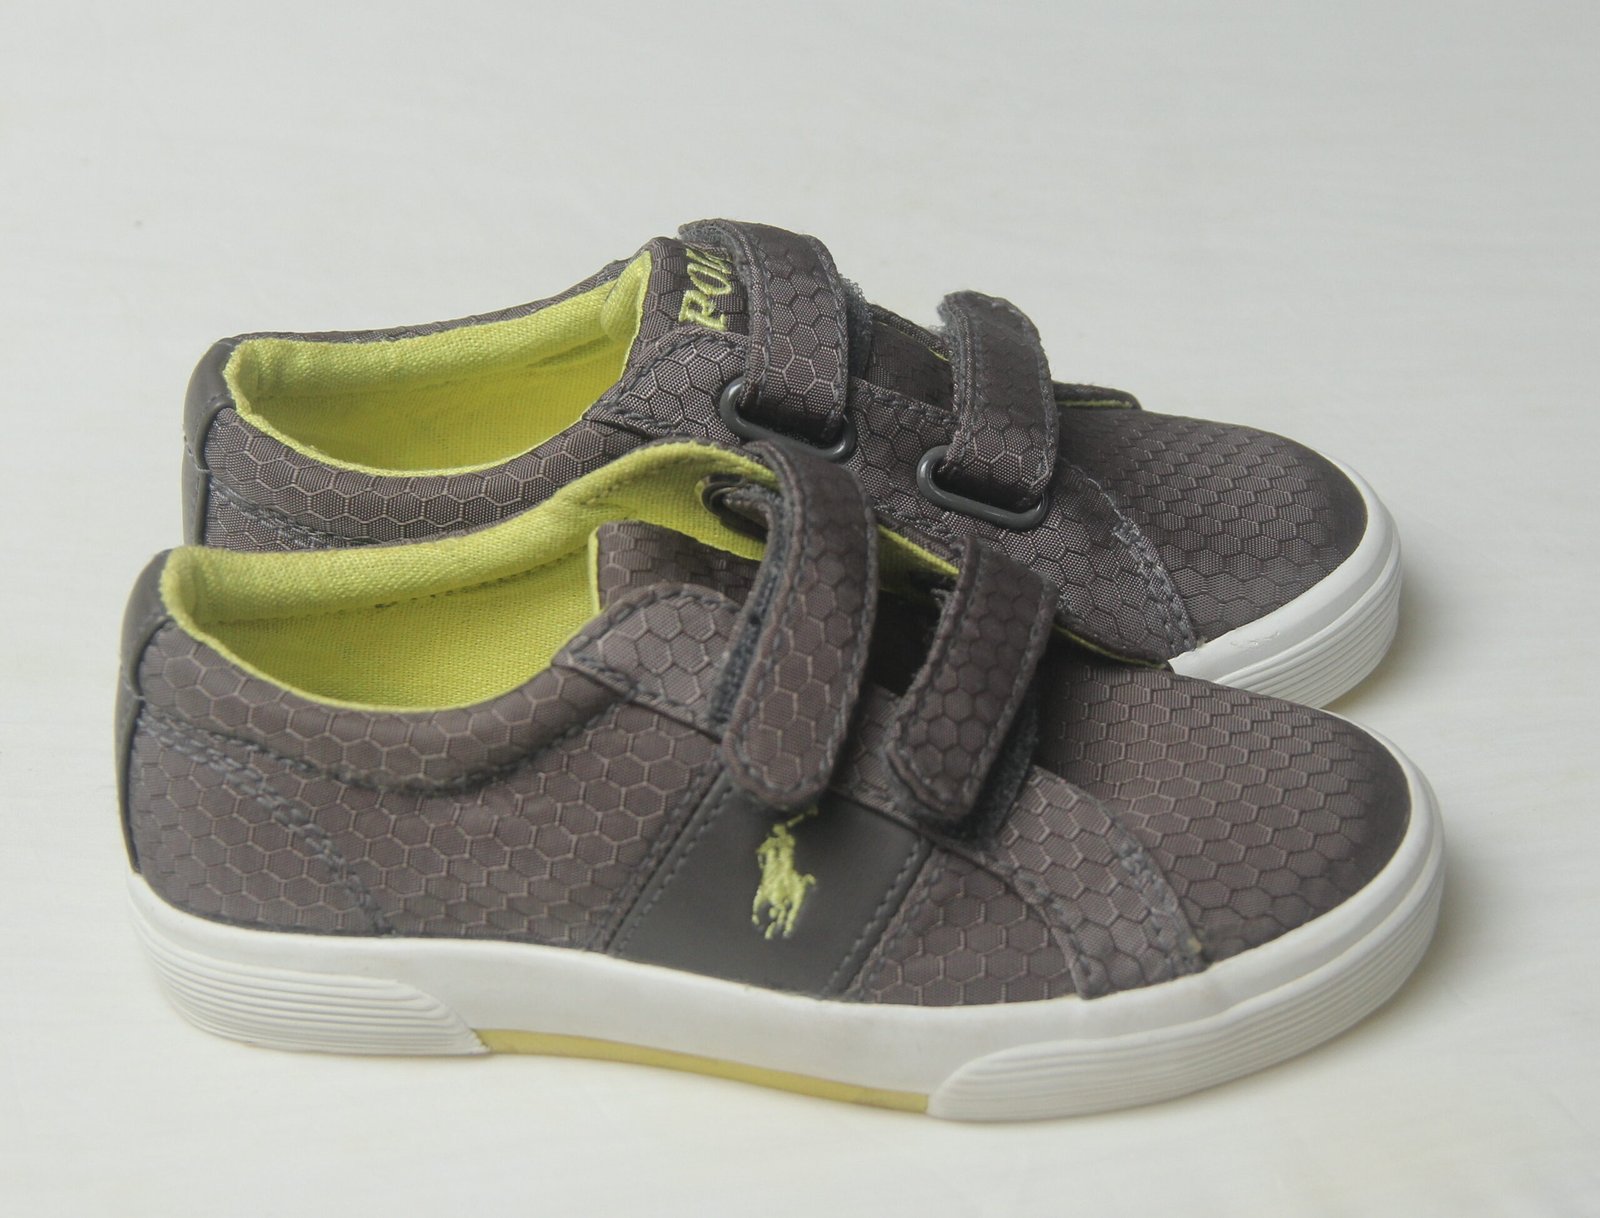 Boys shoes by Polo ralph lauren - Kiddirama Stores